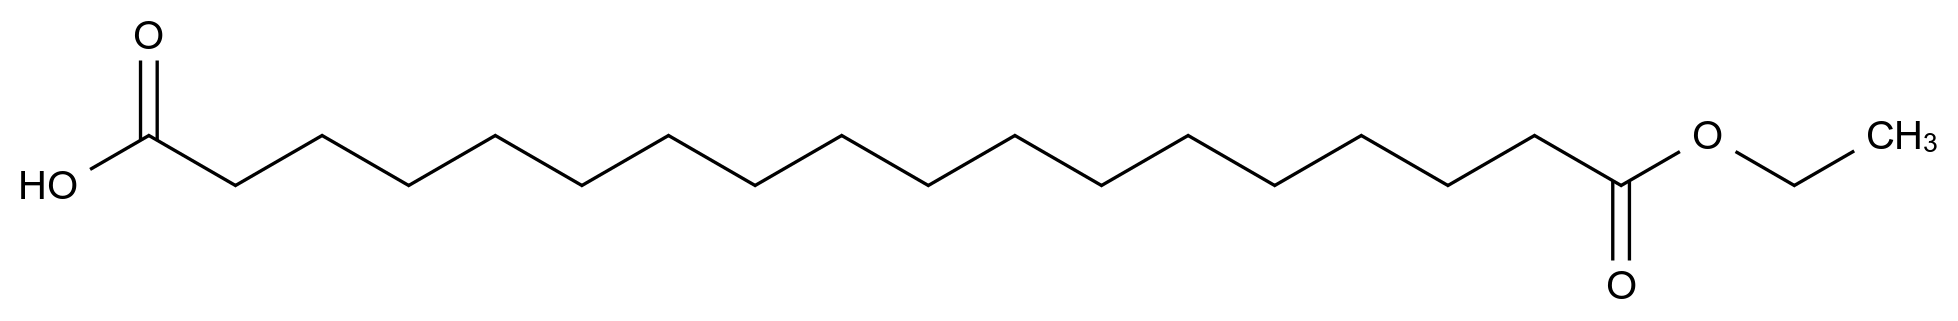 1002-59-1_octadecanedioic acid monoethyl ester标准品